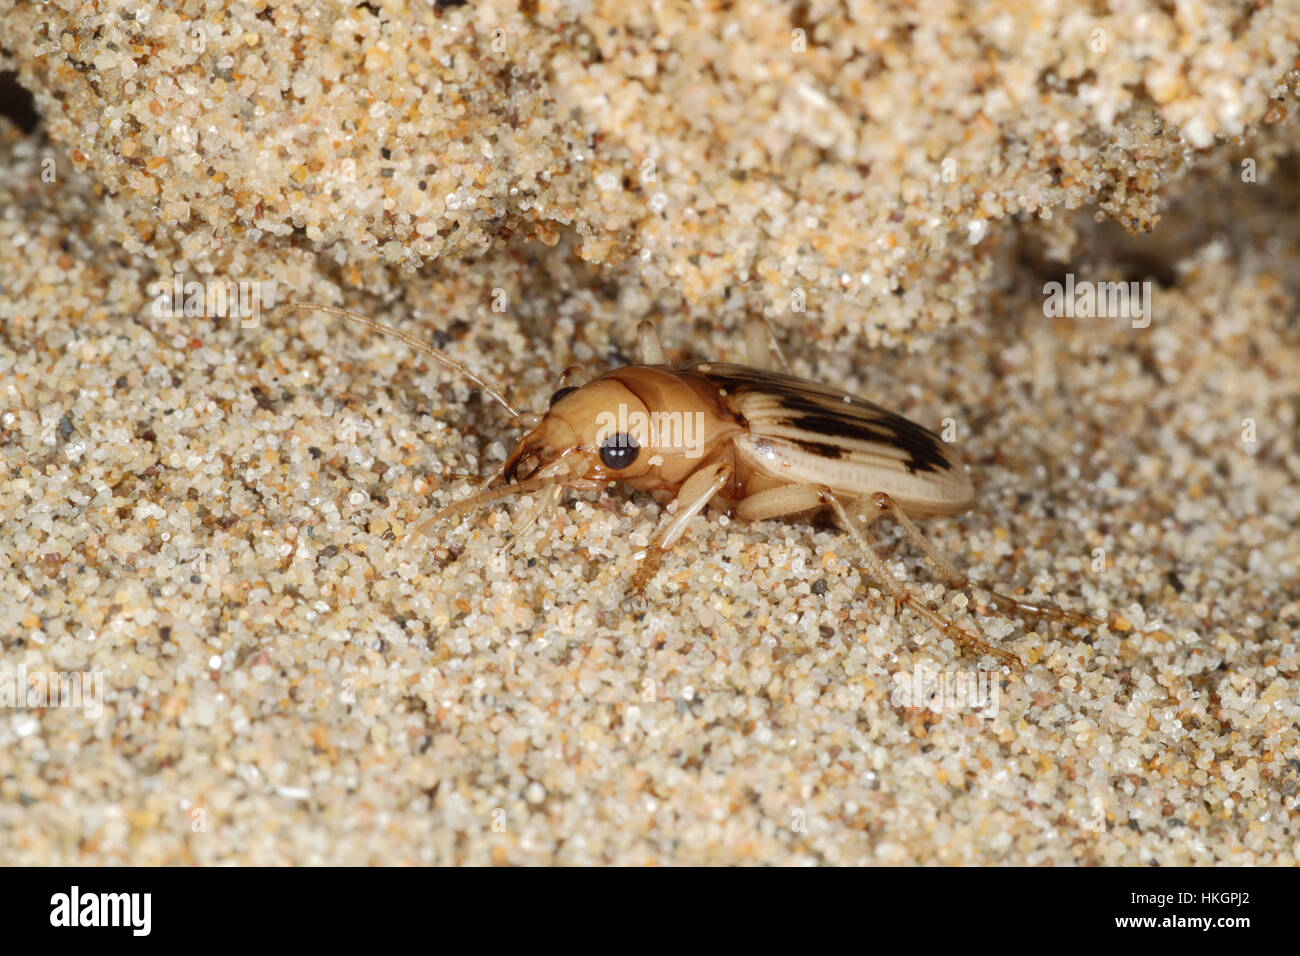 Beachcomber or Strandline Beetle - Eurynebria complanata Stock Photo